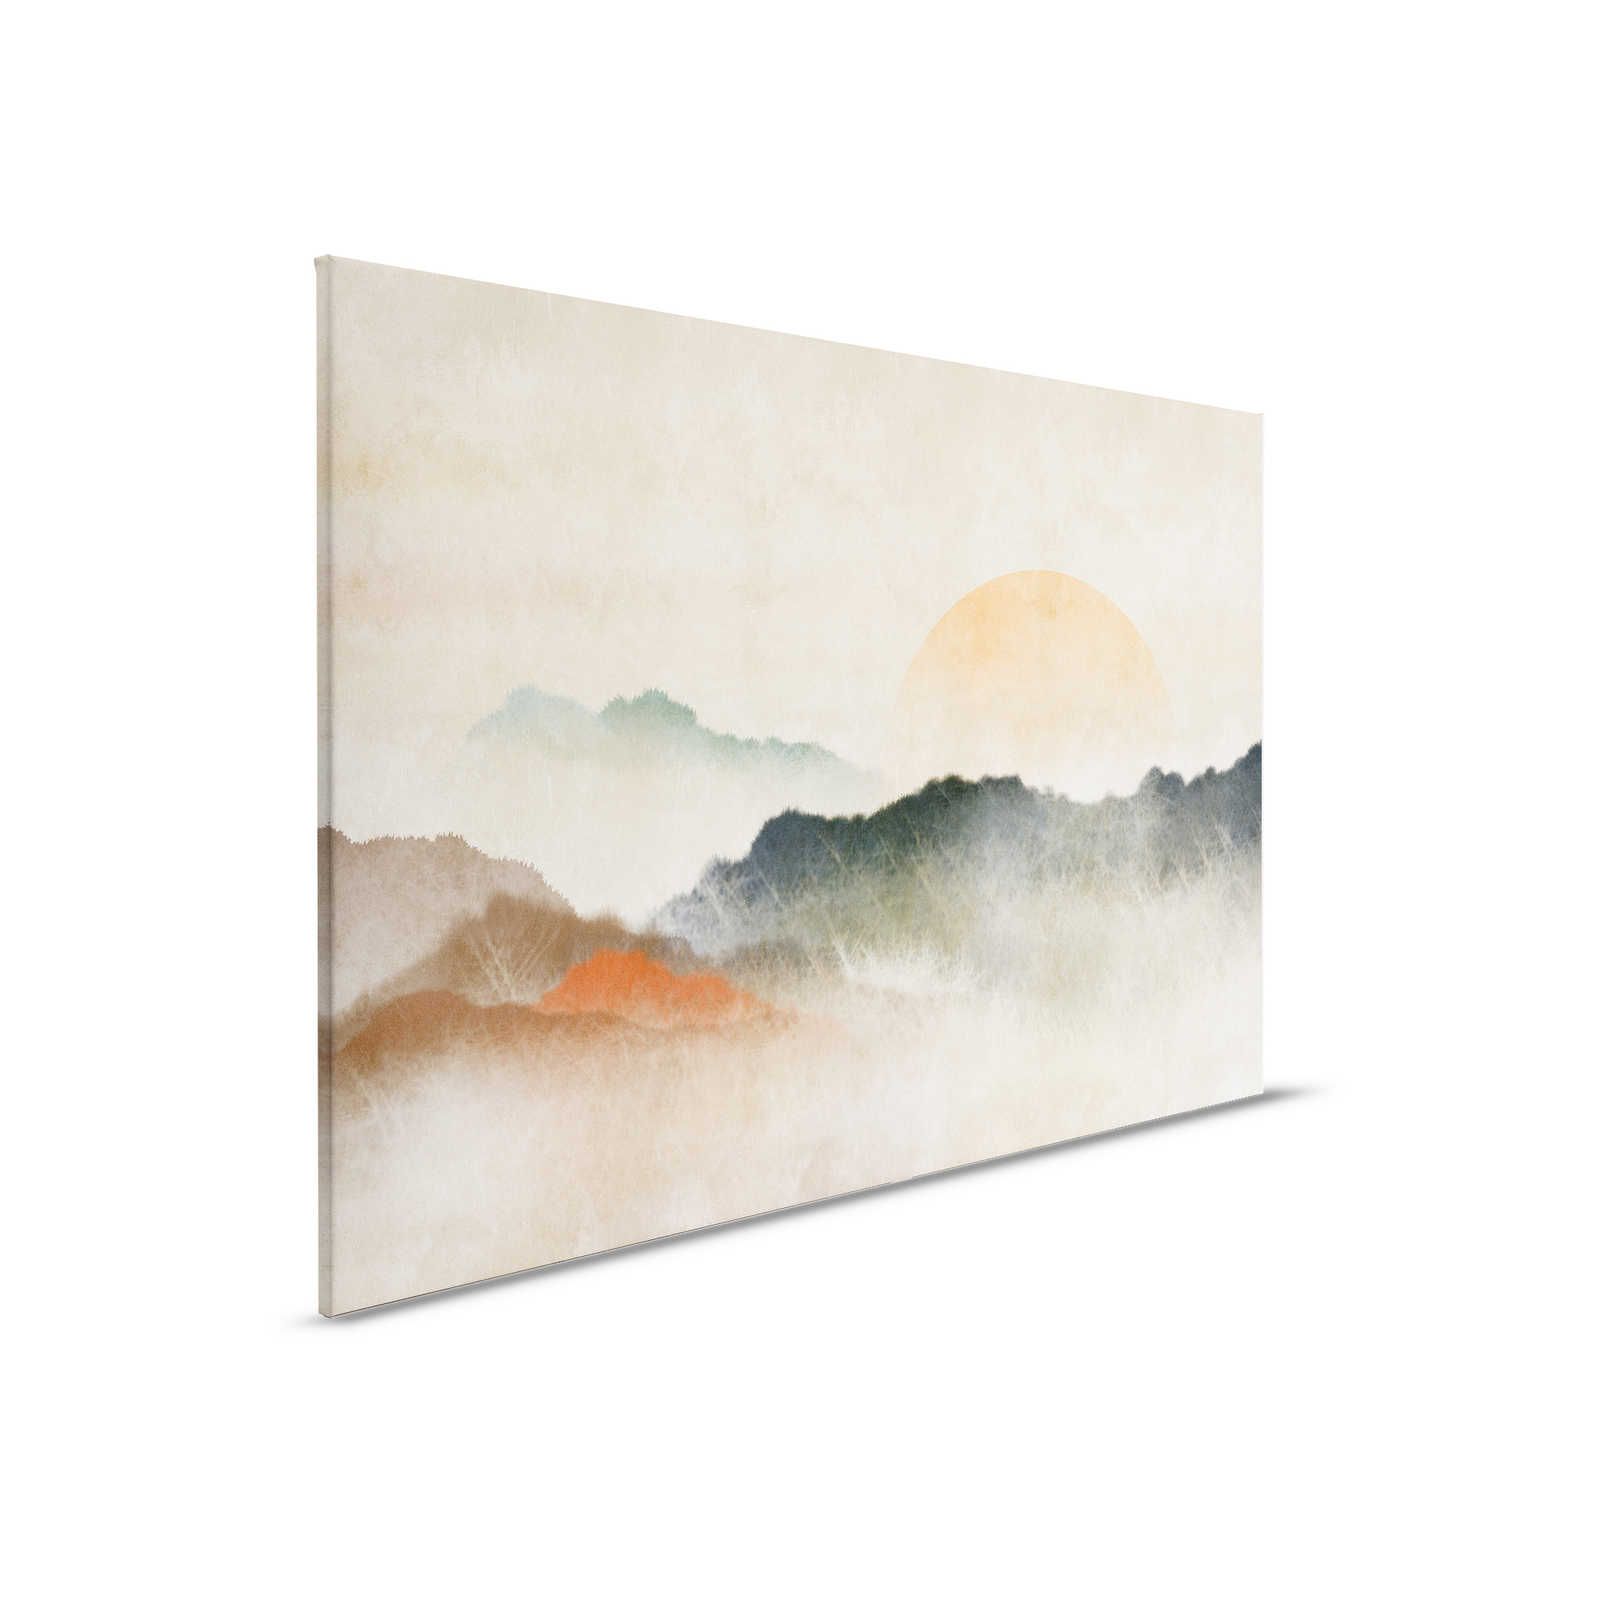         Akaishi 3 - Leinwandbild Sonnenaufgang, Kunstdruck im Asia Style – 0,90 m x 0,60 m
    